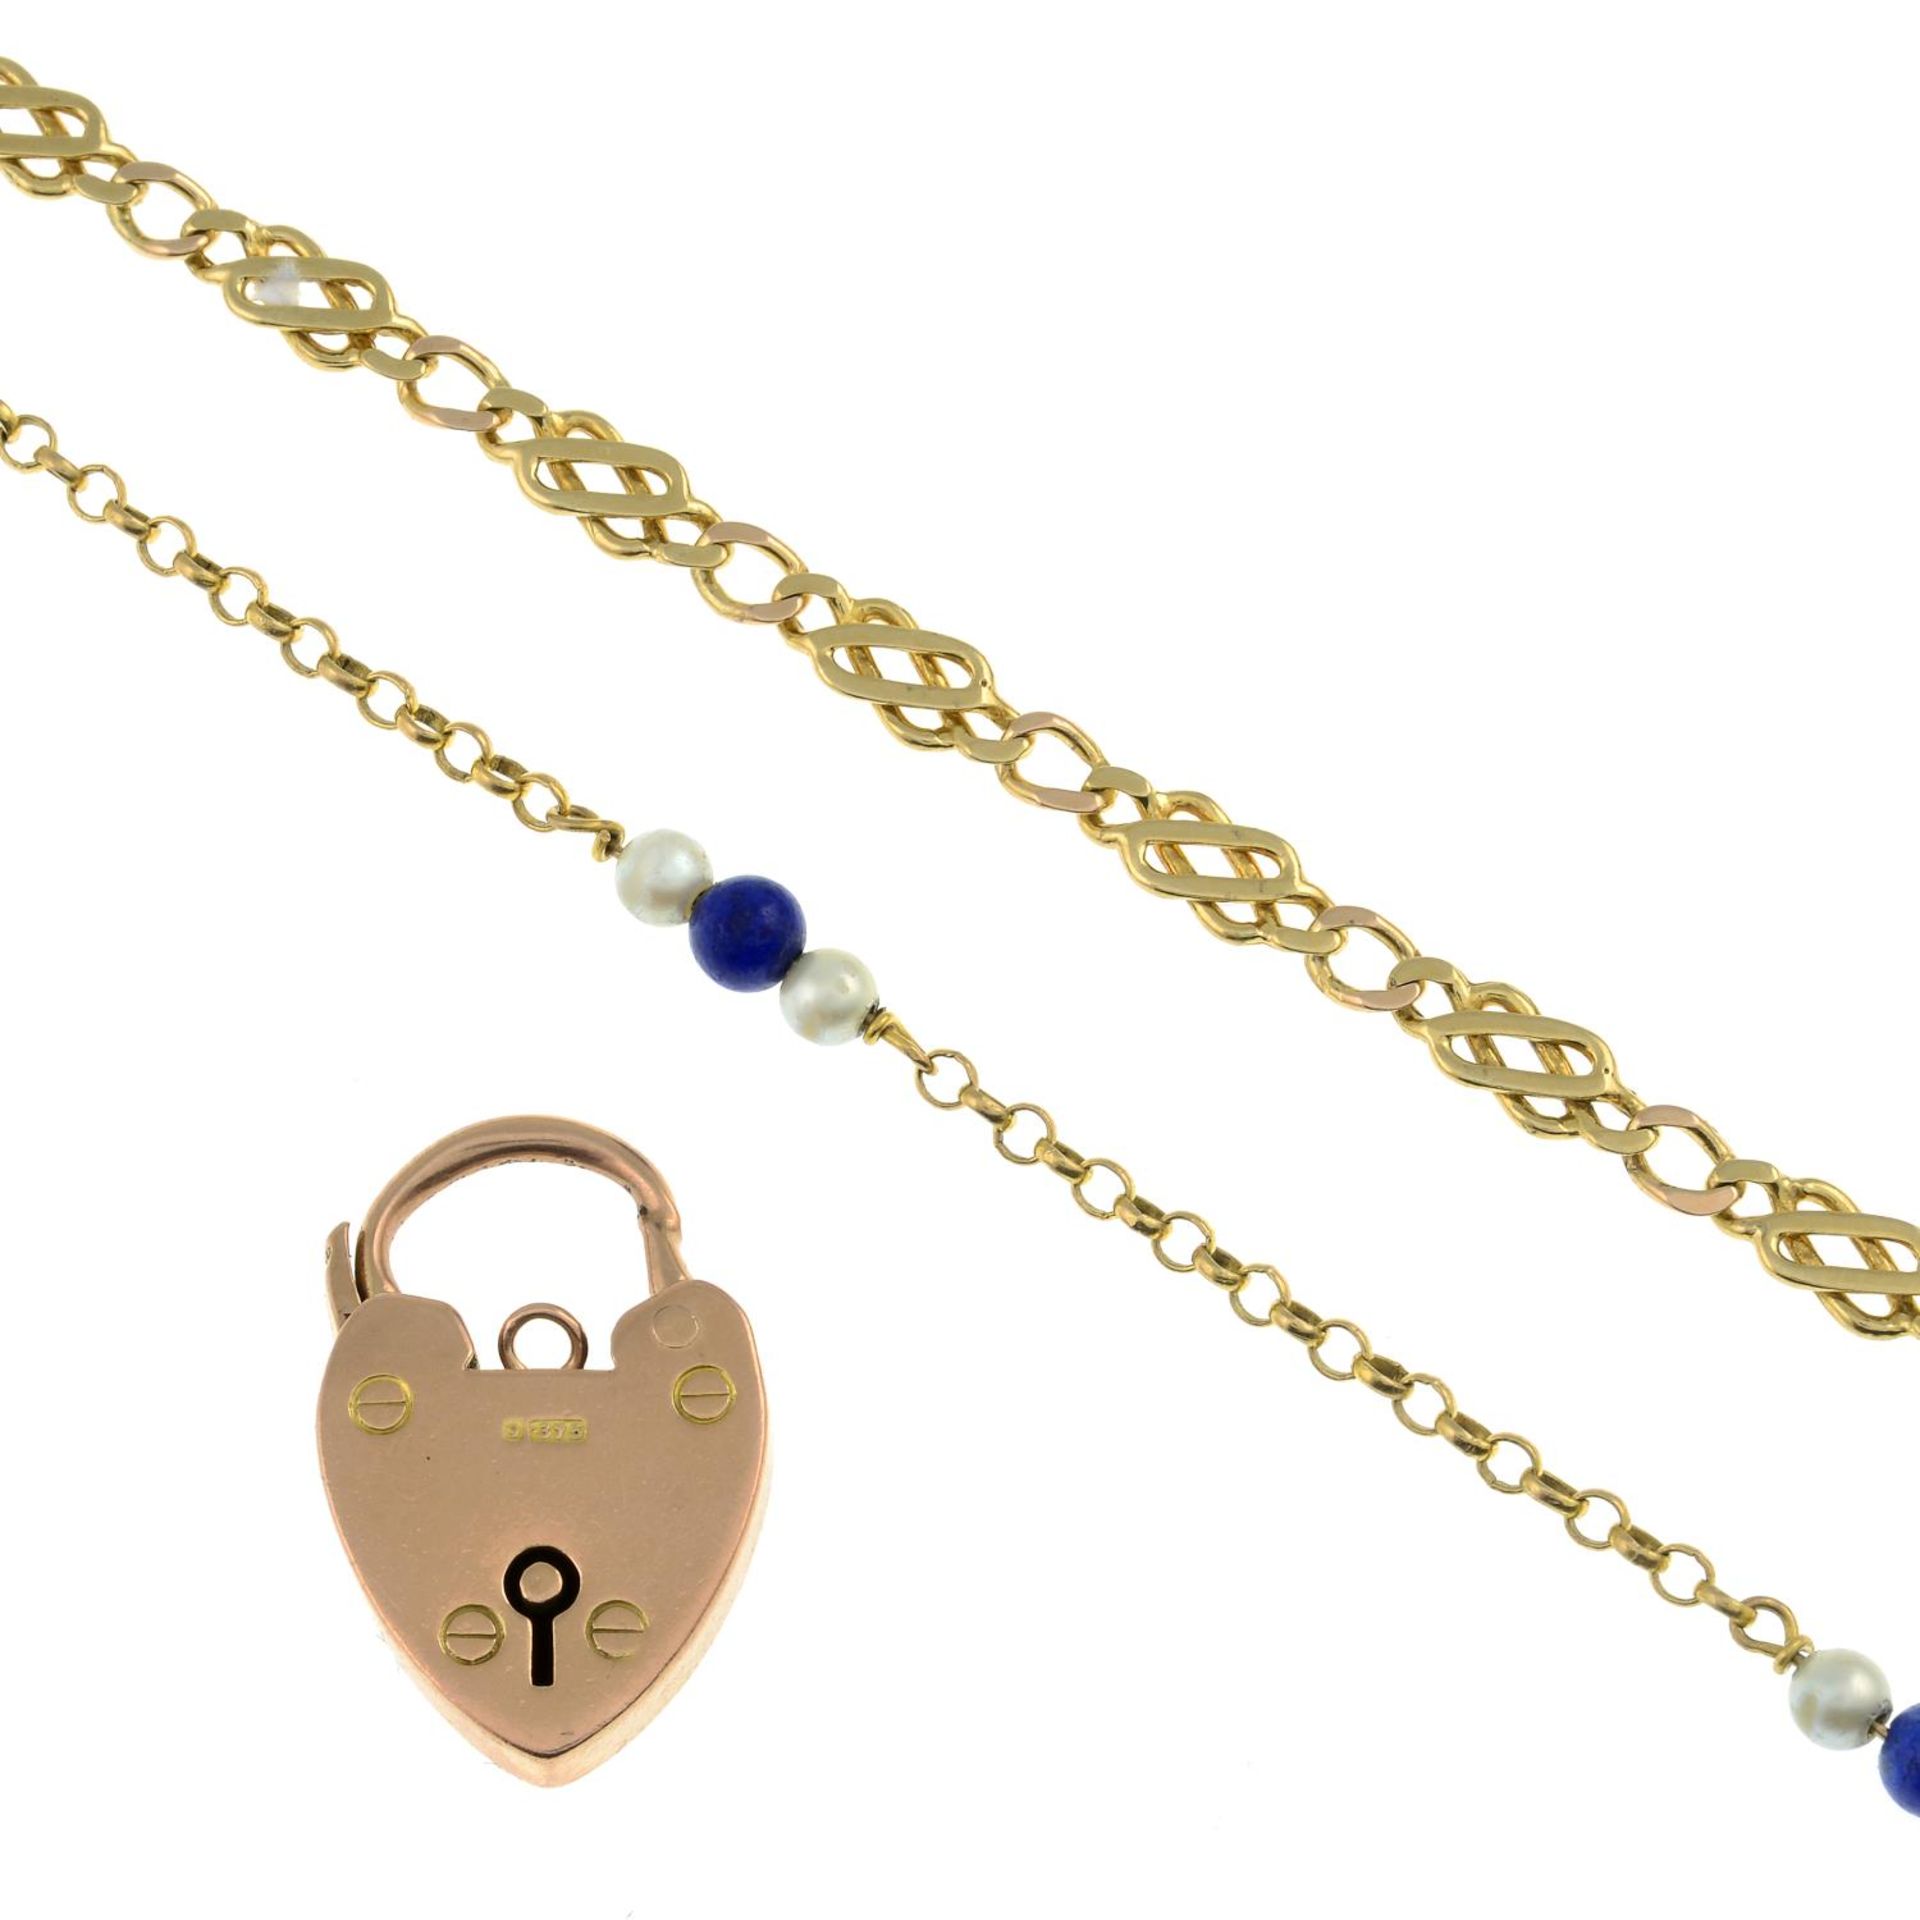 Edwardian 9ct gold heart padlock clasp,